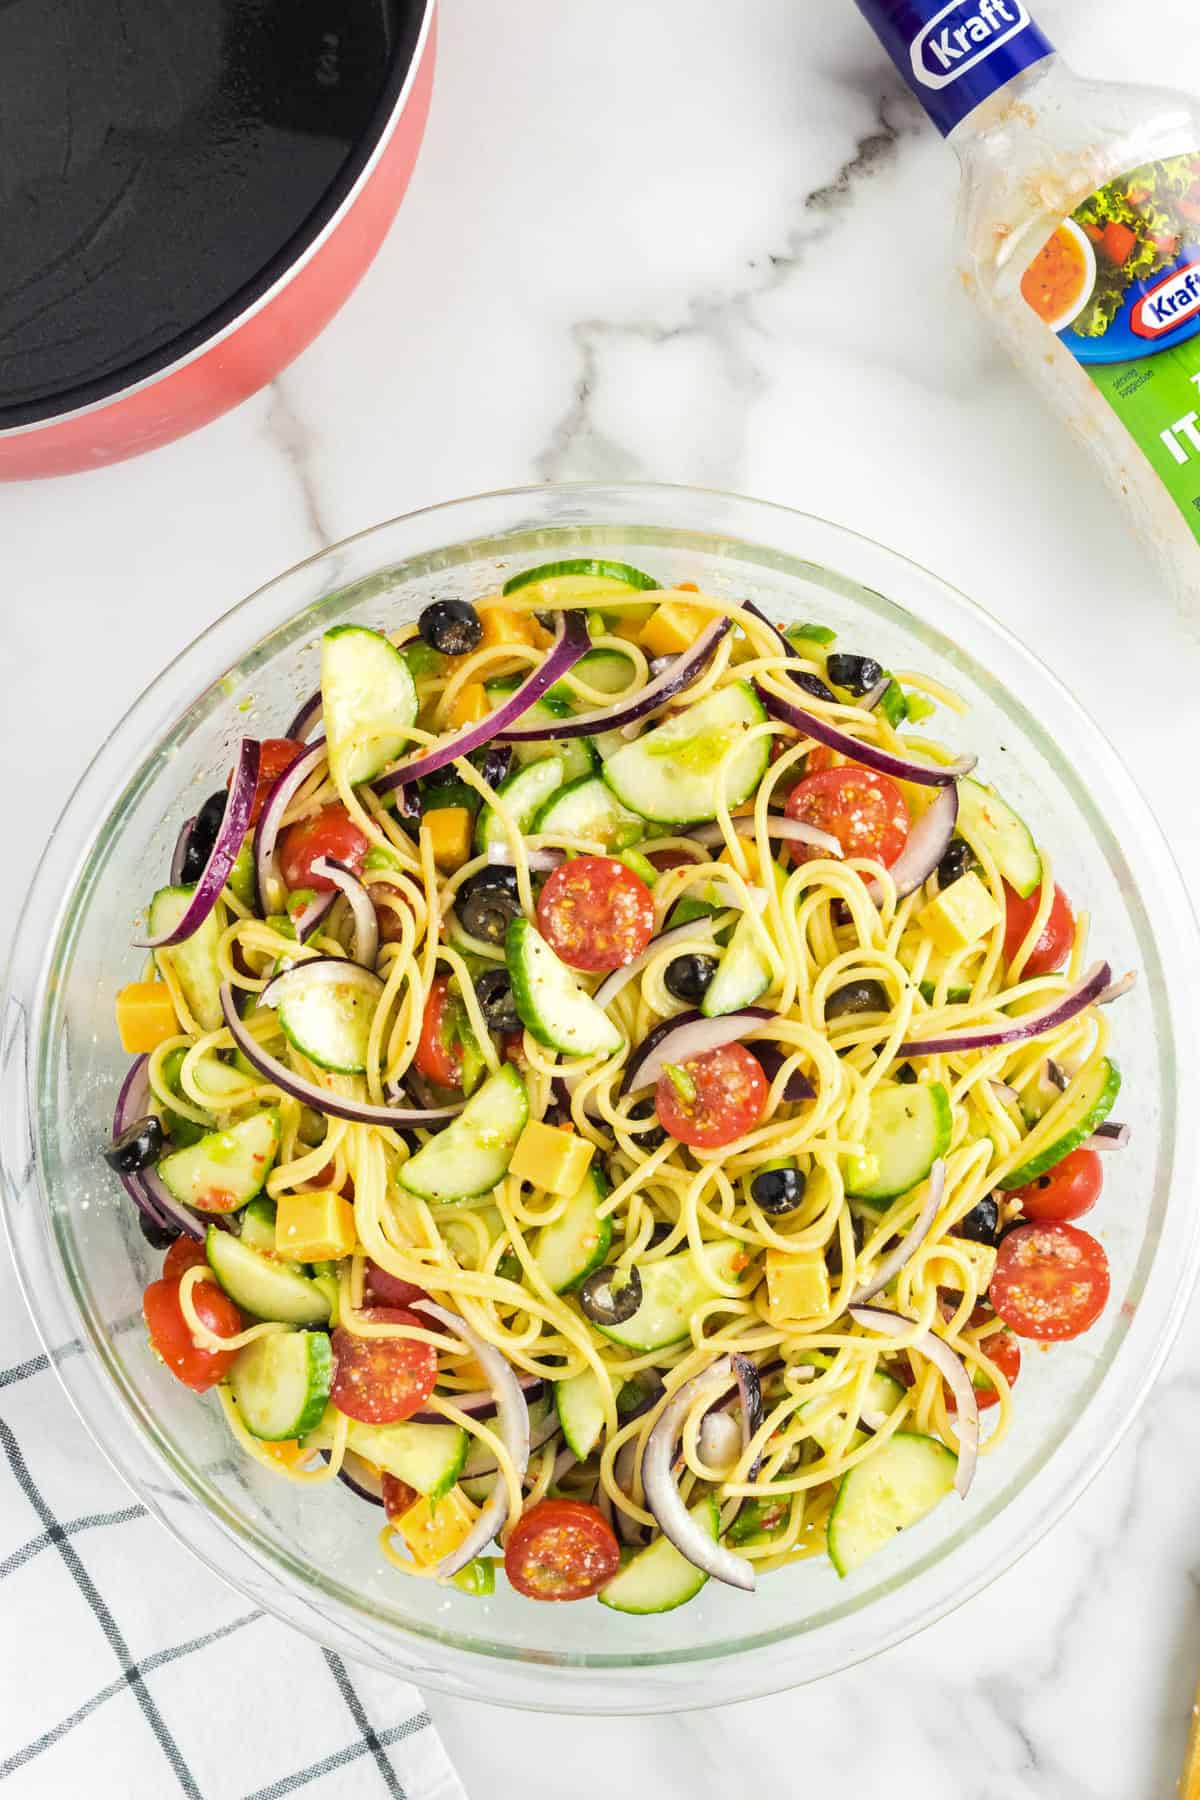 Tossed Spaghetti Salad recipe in bowl ready to enjoy